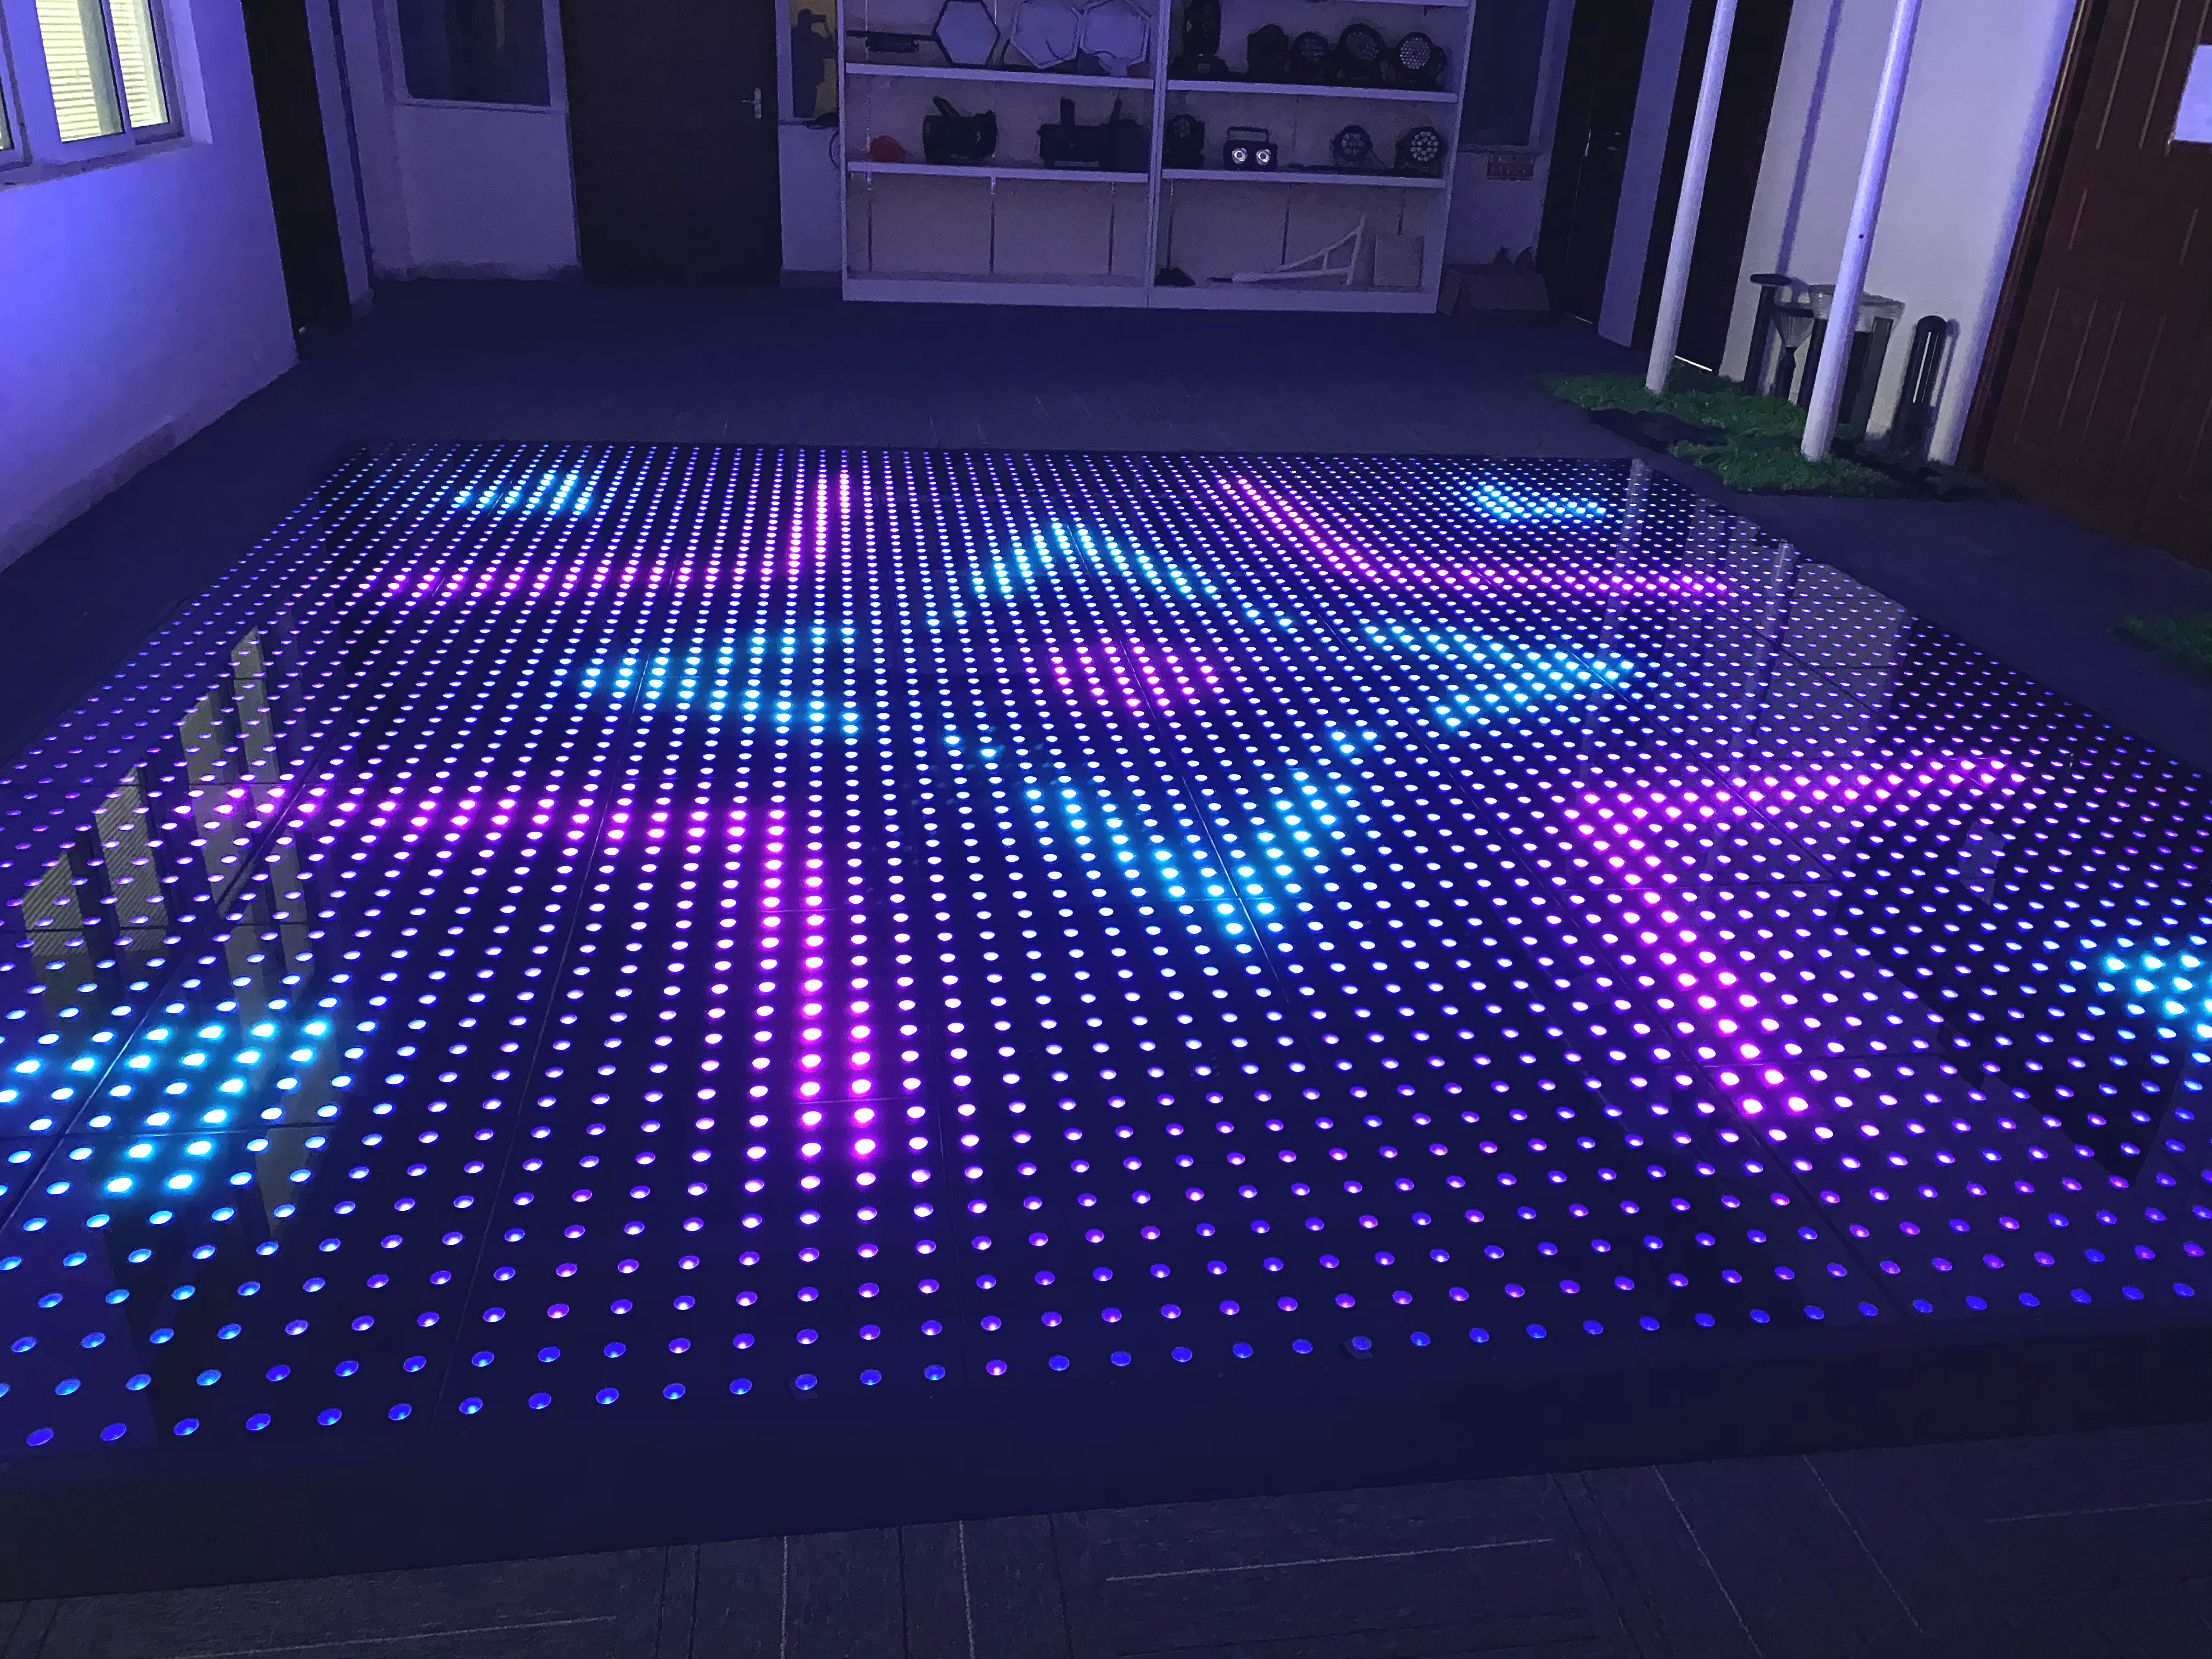 Wireless Pixel Portable Led Dance Floor For Sale